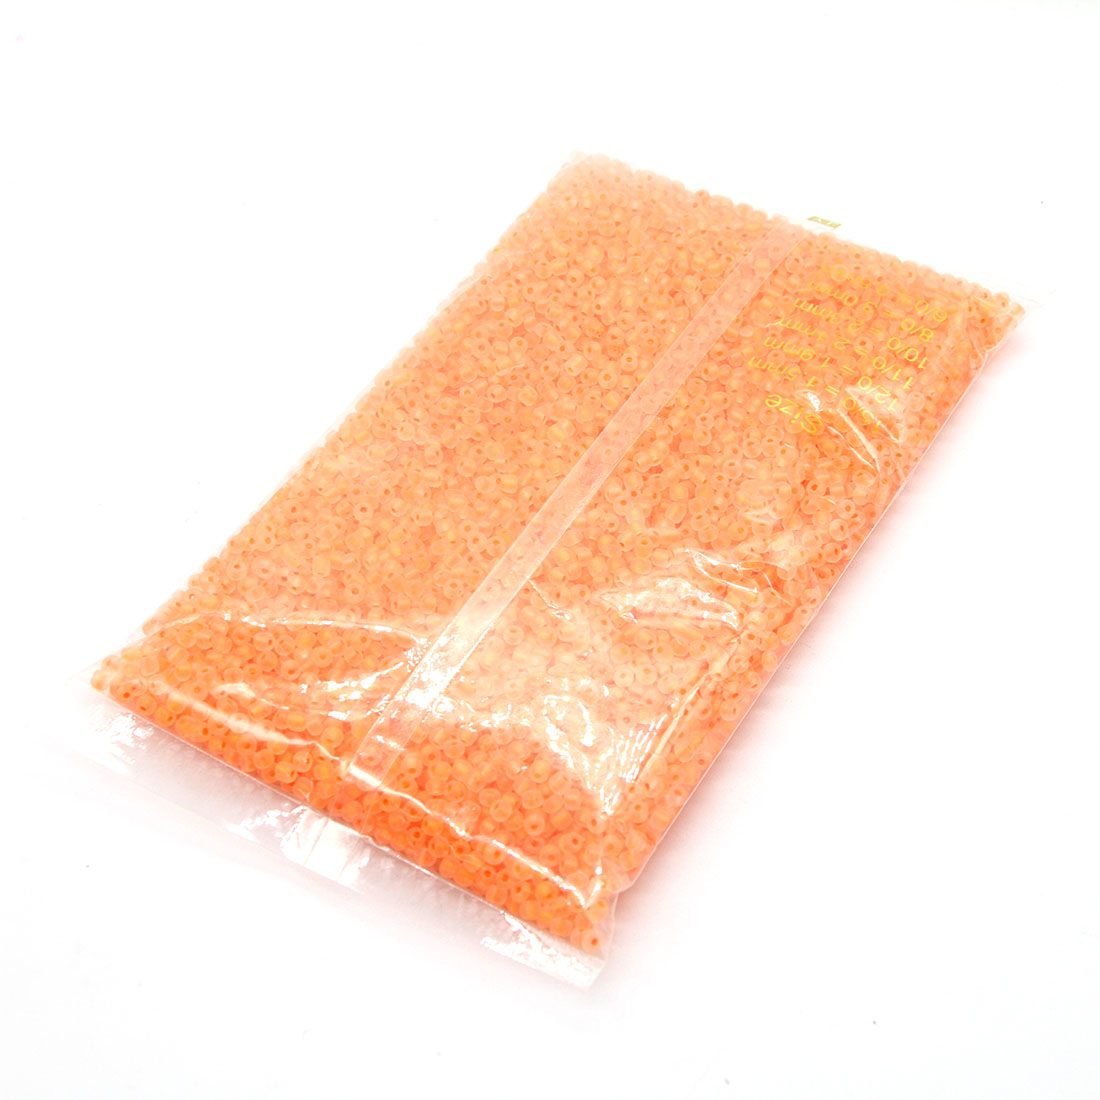 Orange 2mm 30,000 packs